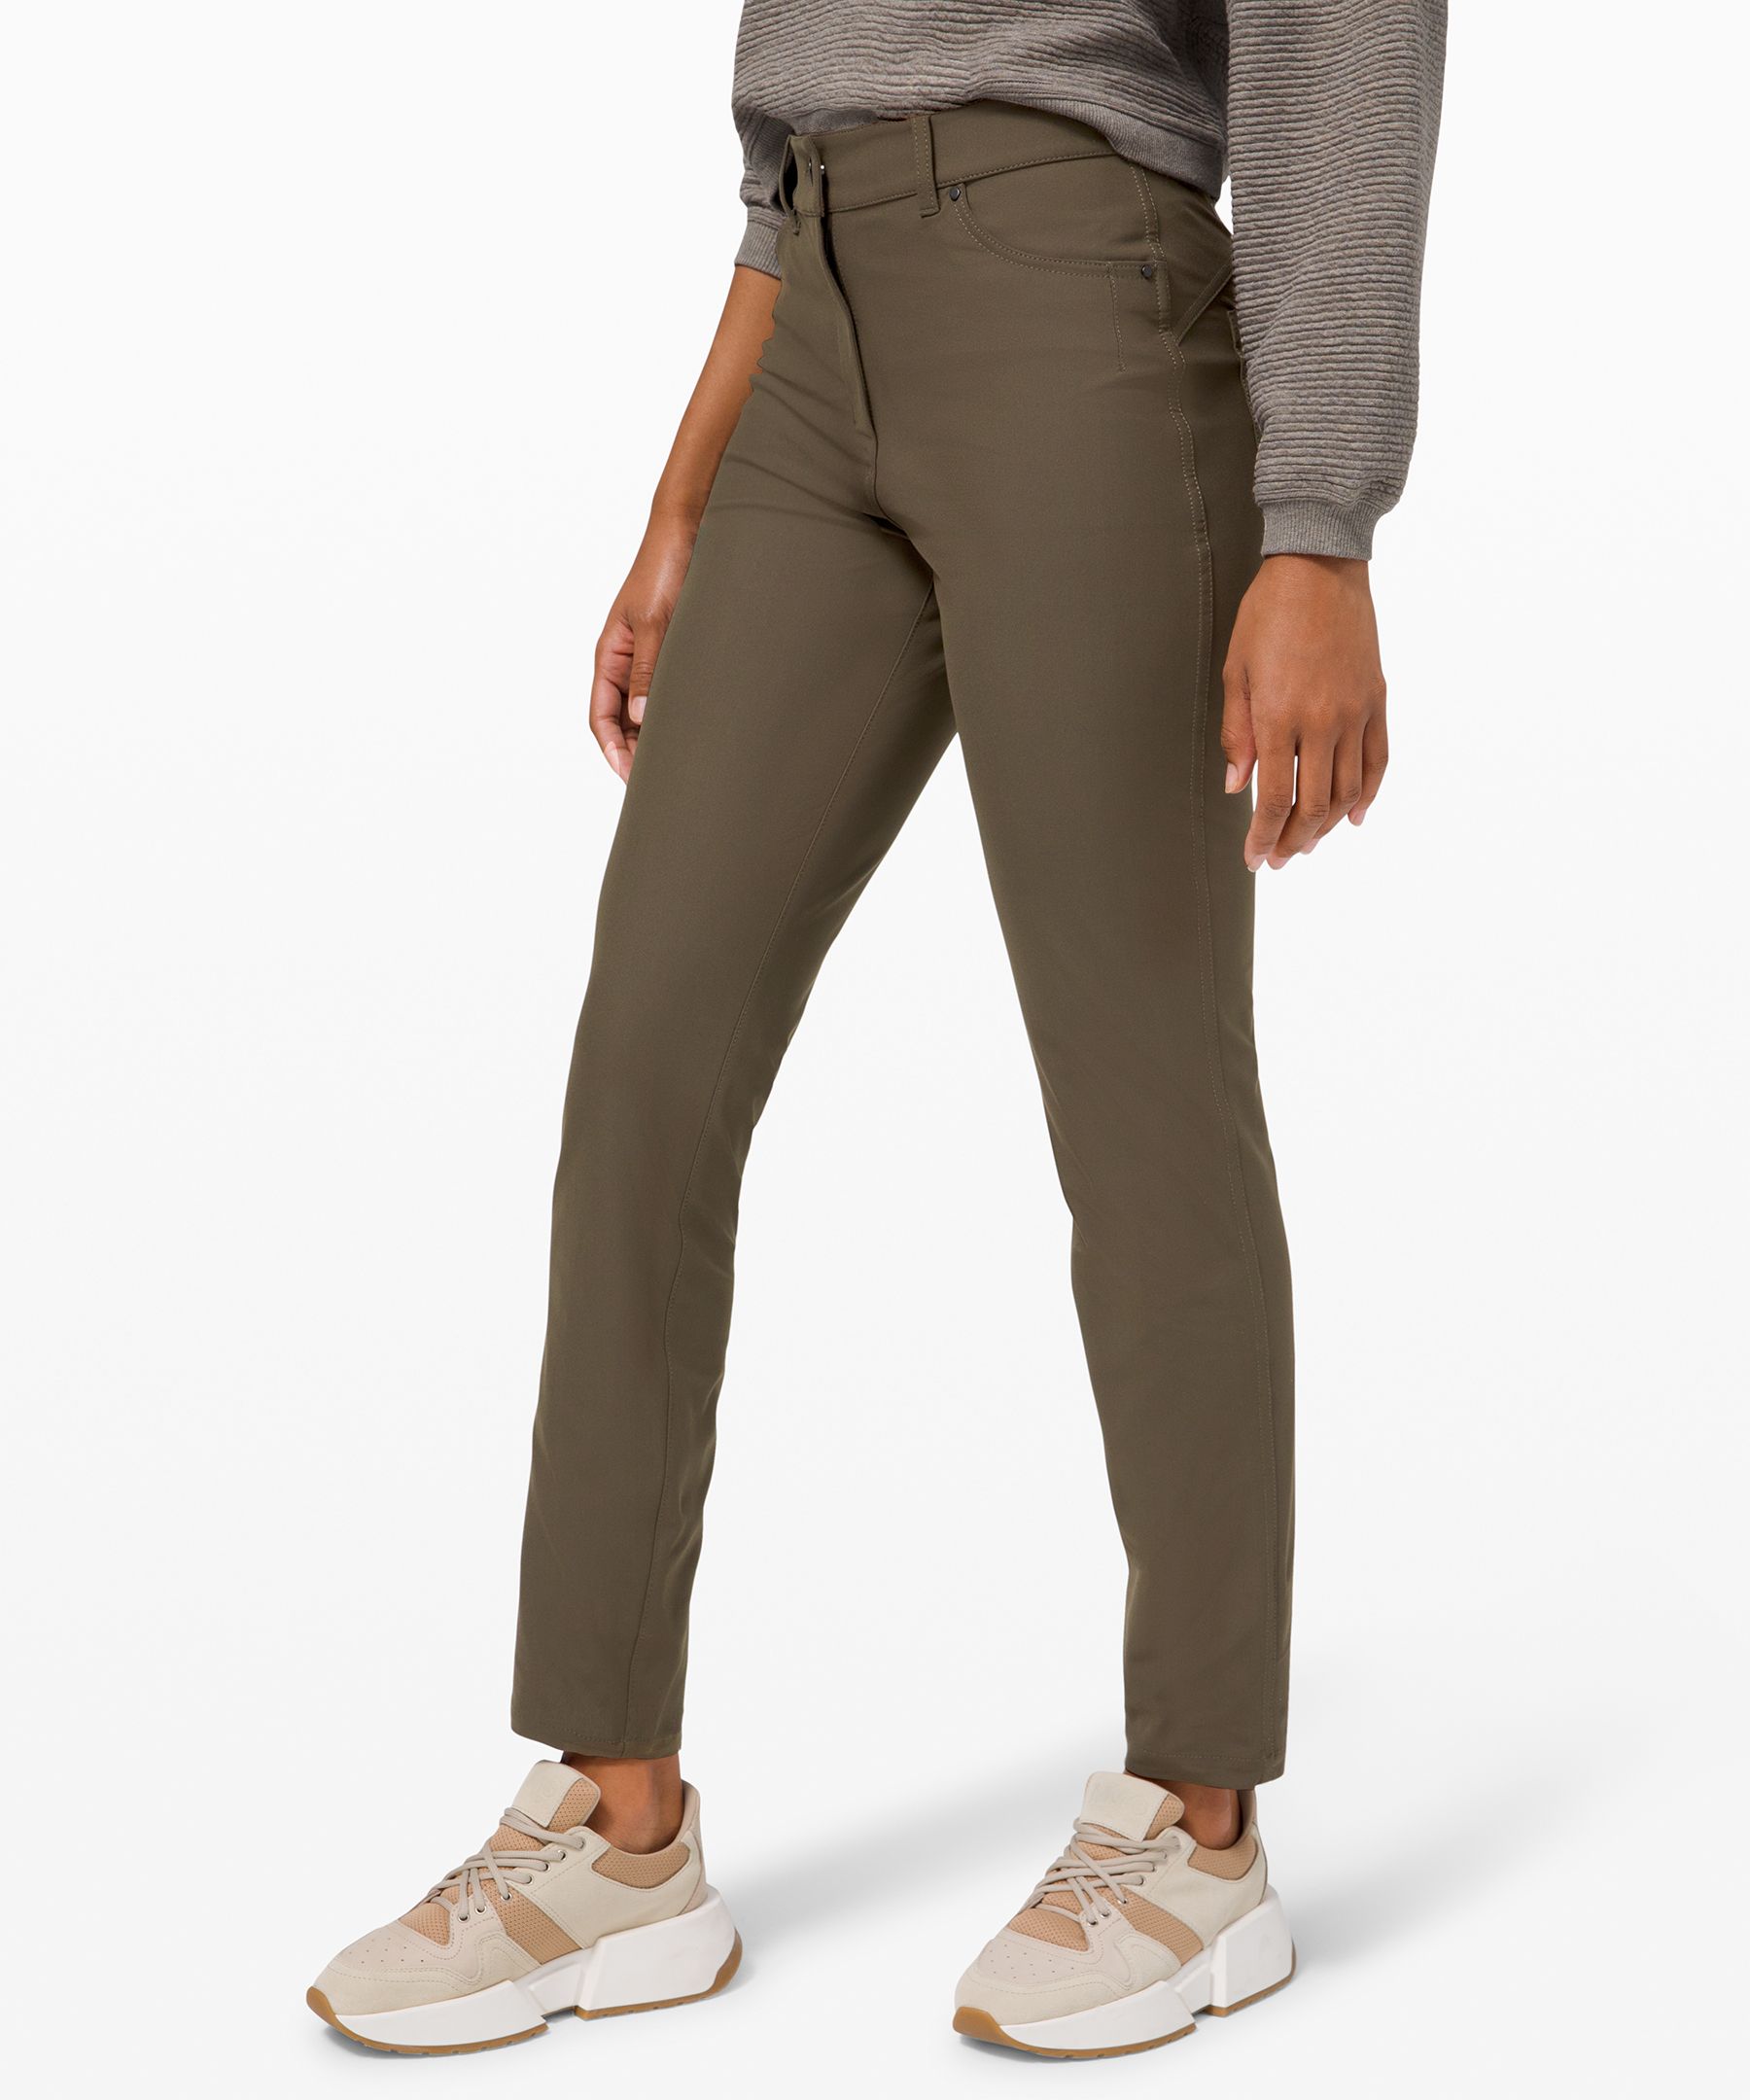 City Sleek 7/8 pants in size 12 (spiced bronze) : r/lululemon